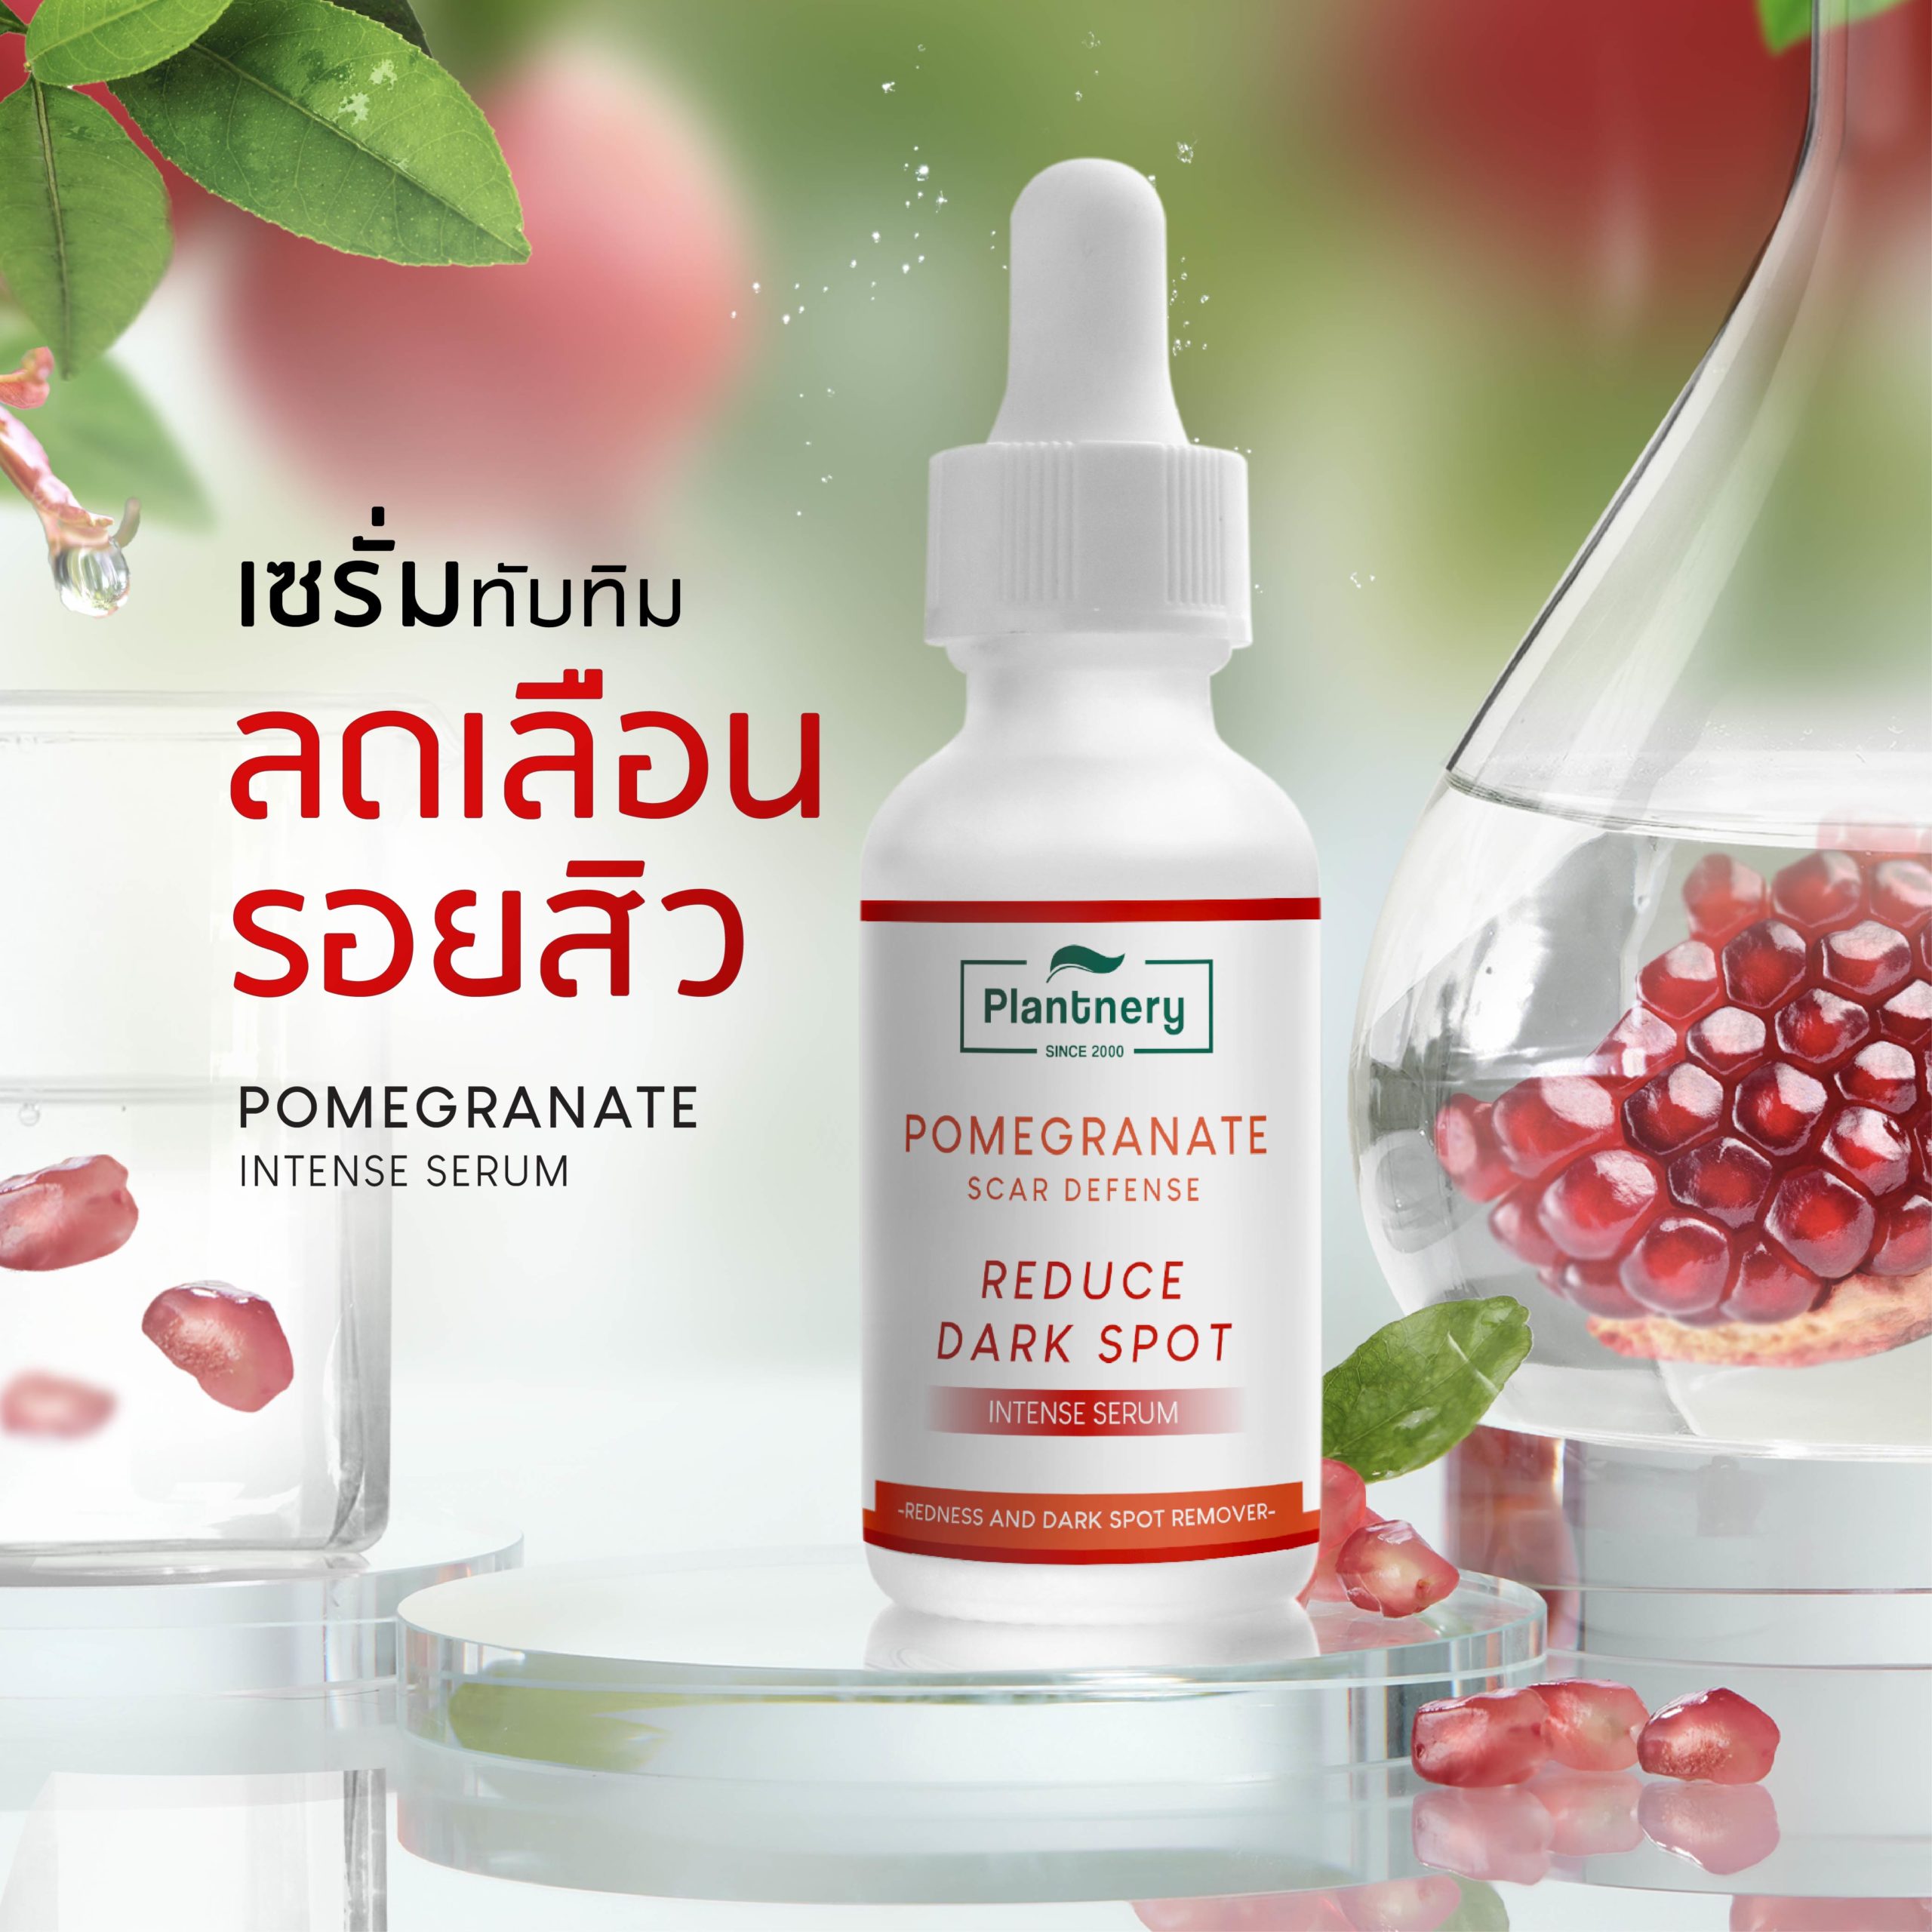 Pomegranate intense serum Rev.2 02